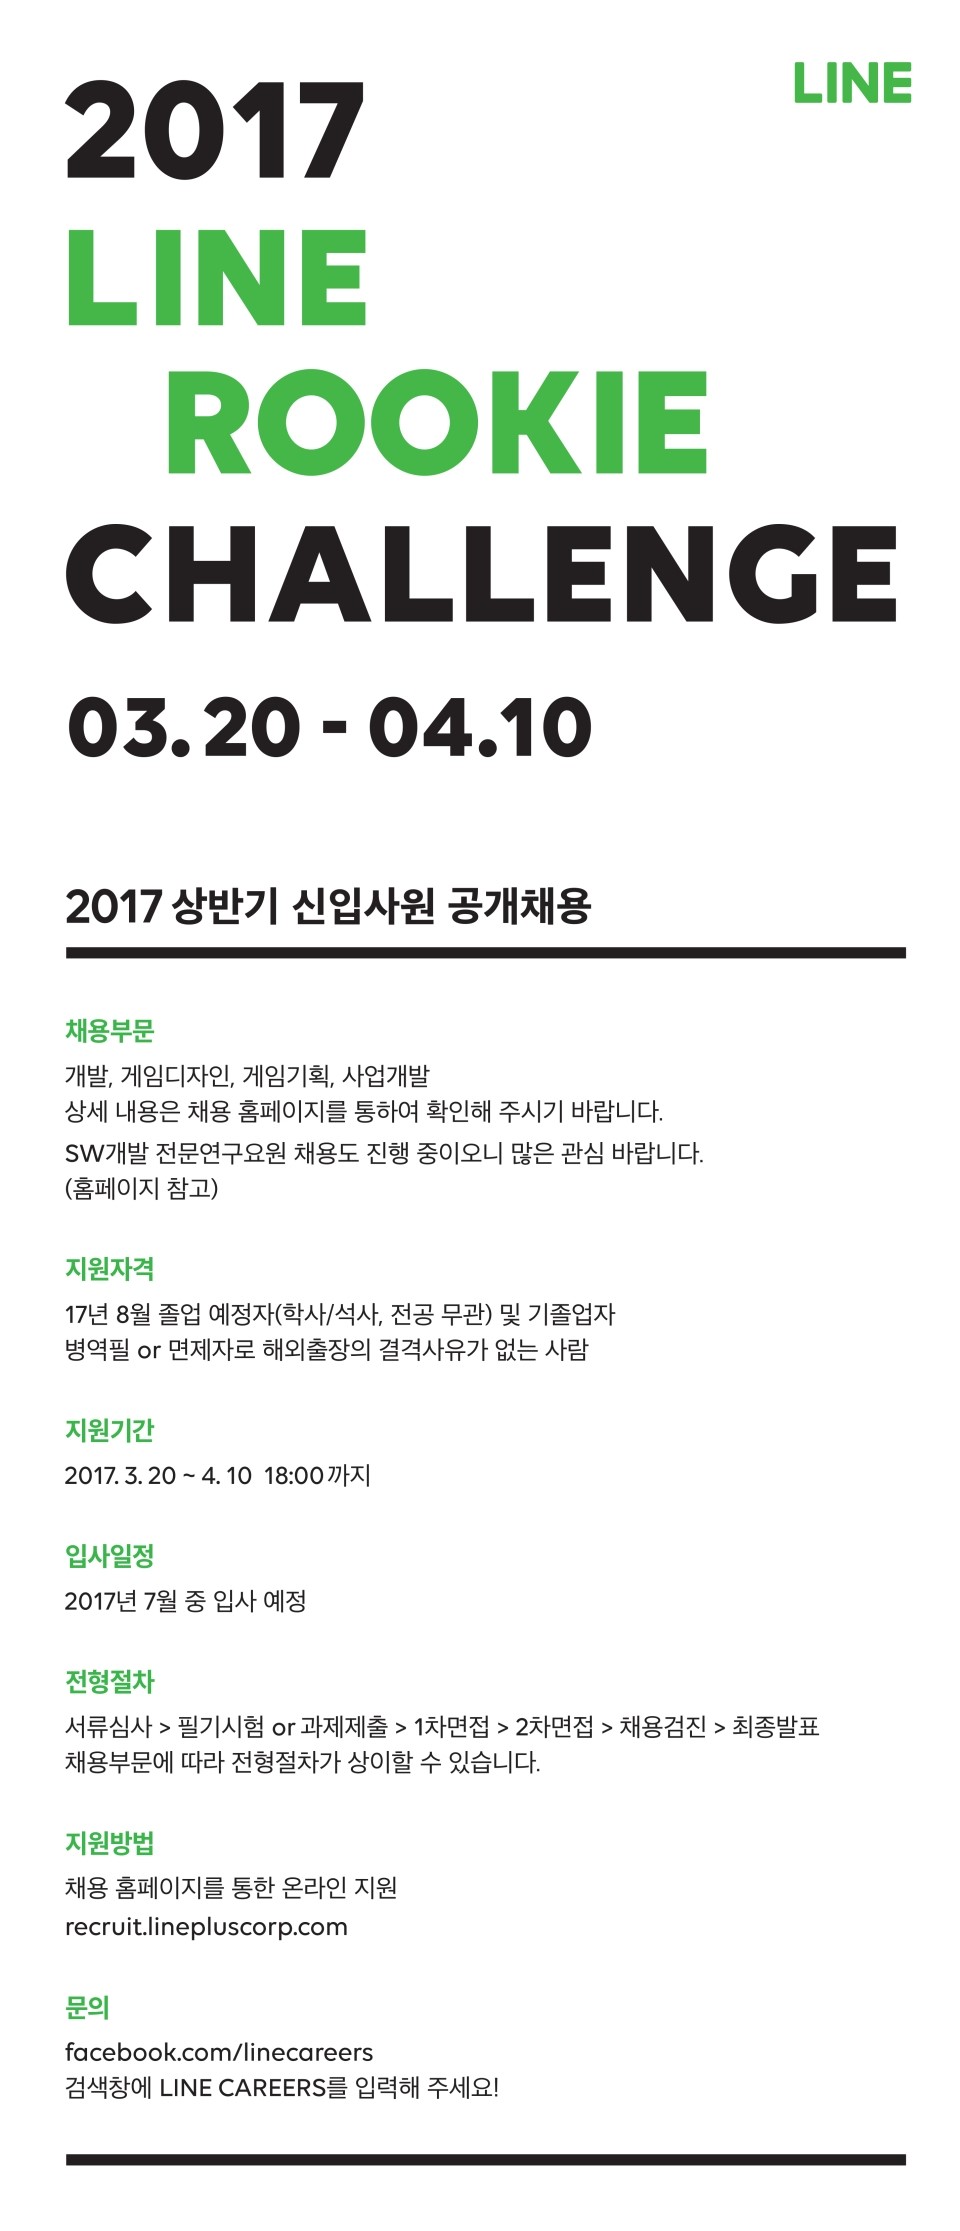 (LINE ) 2017 상반기 신입사원 공개채용 모집 요강_ROOKIE CHALLENGE_ws